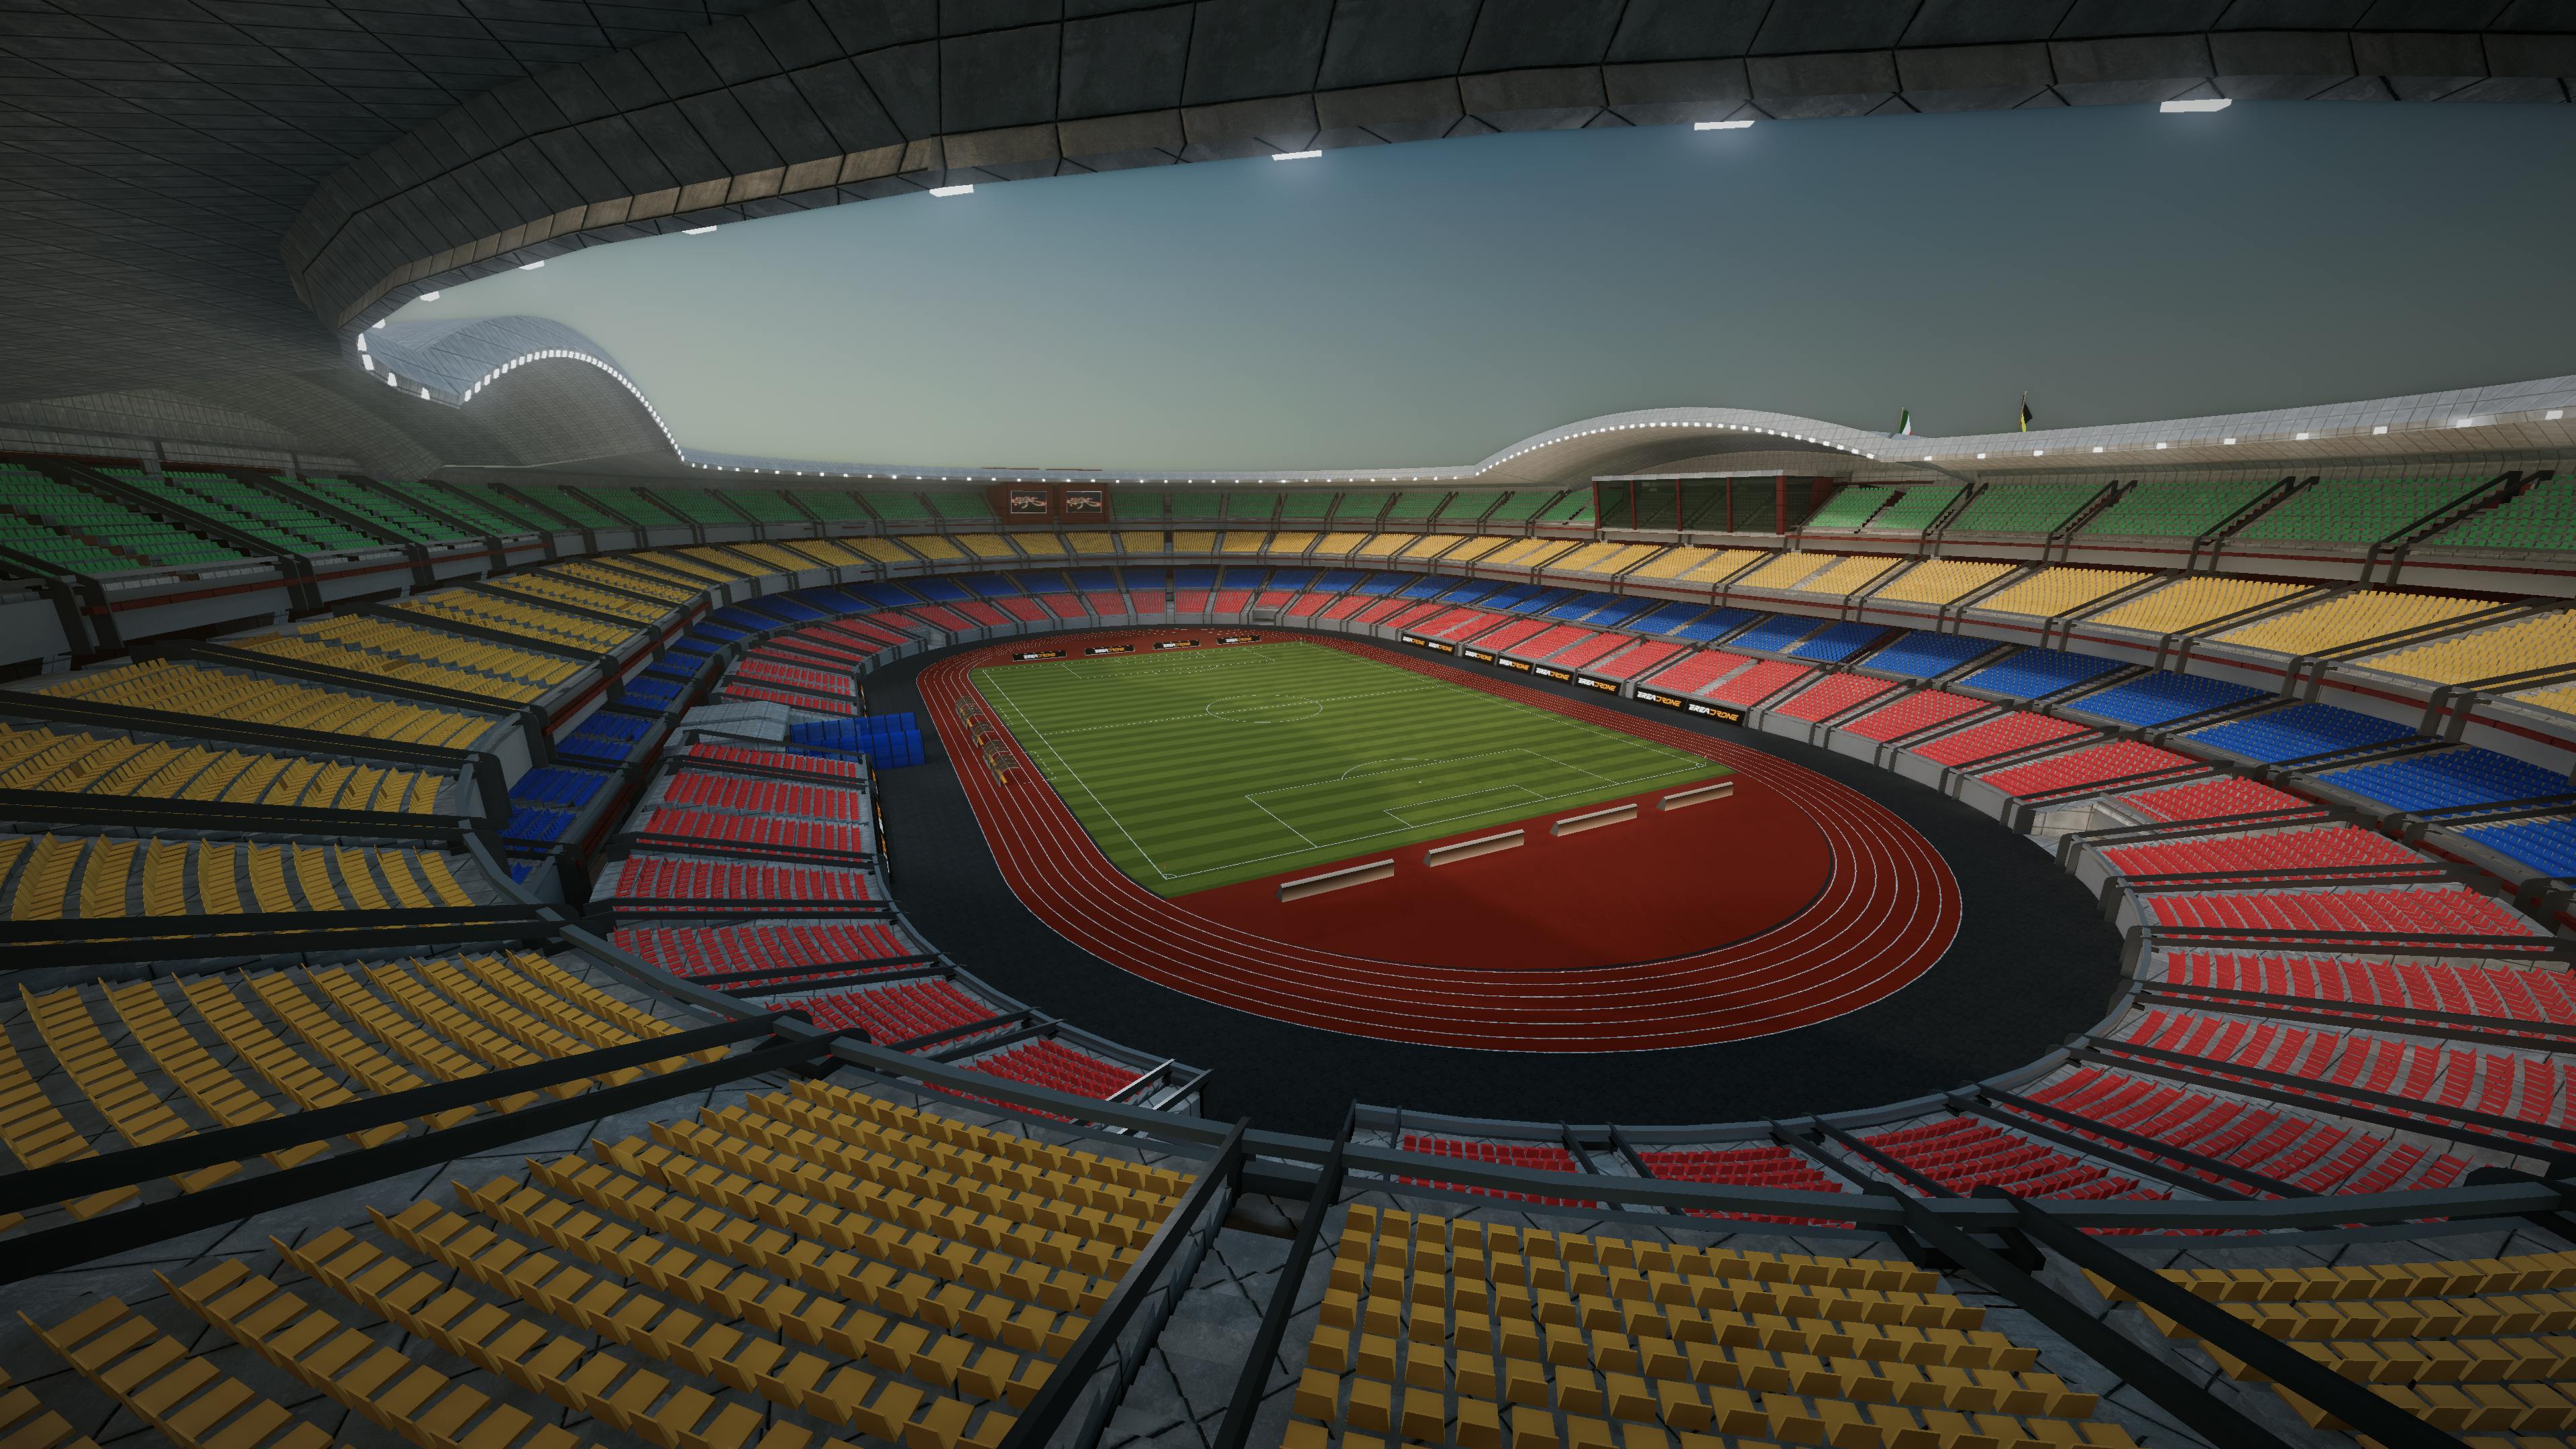 Stadium environment